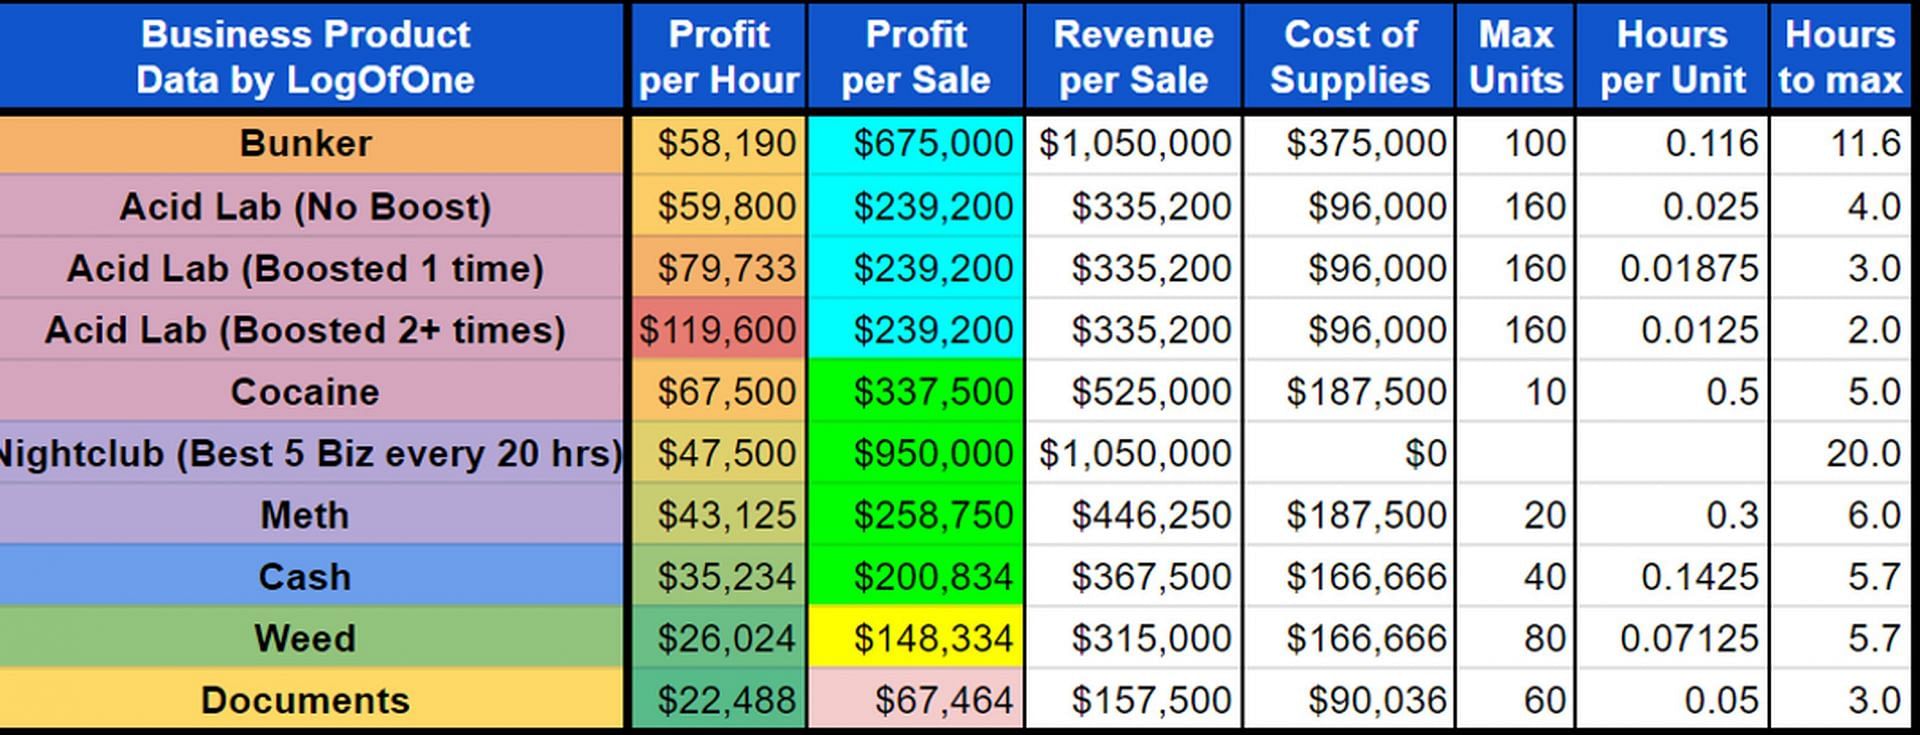 This MC Business has the worst hourly profits (Image via u/LogOfOne)